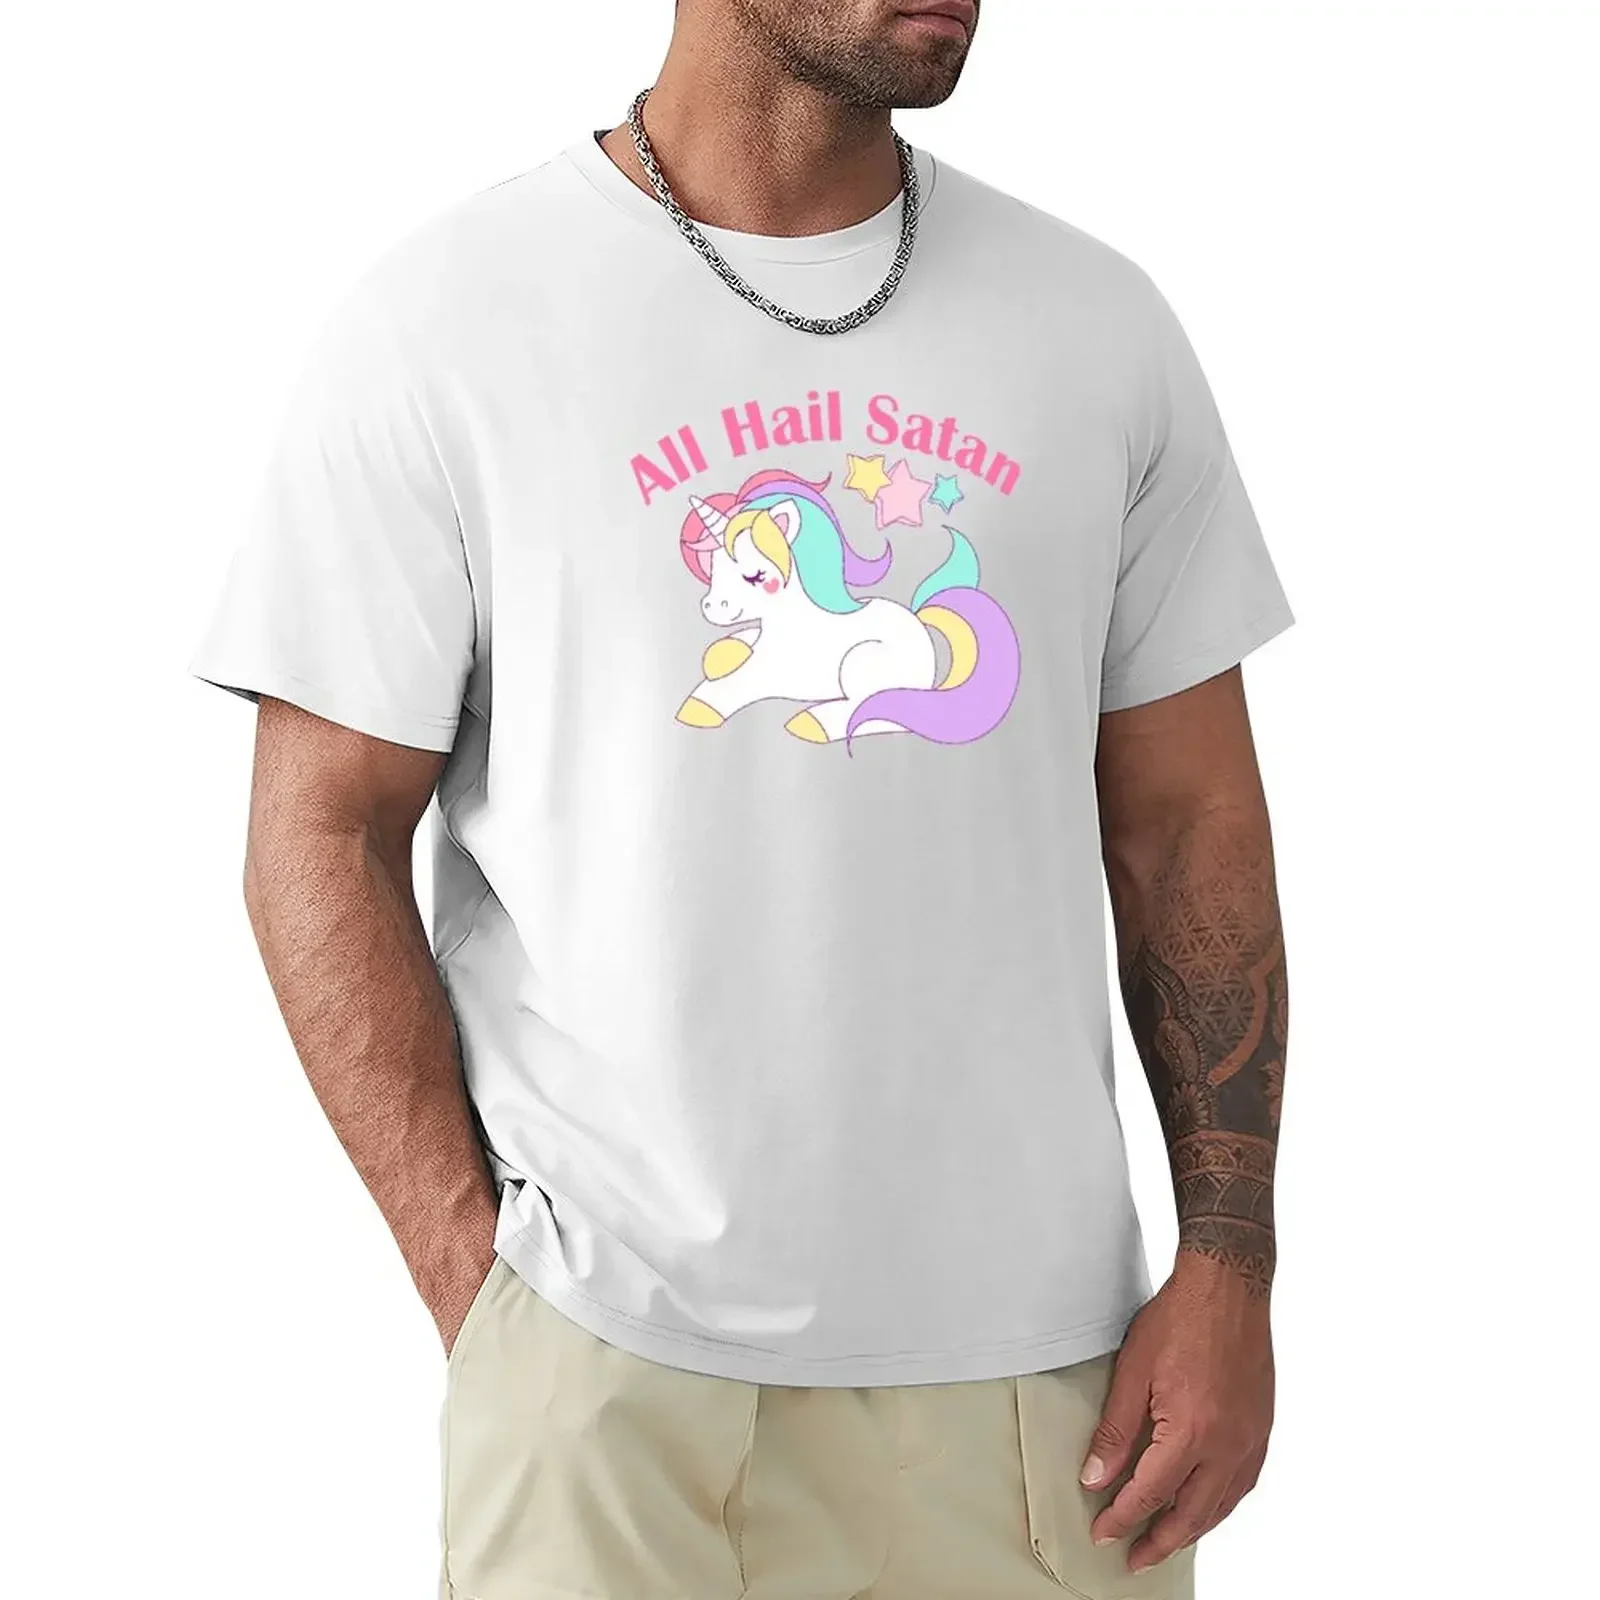 

All Hail Satan! Pastel Goth Death Metal Unicorn Parody T-Shirt hippie clothes tees Men's clothing